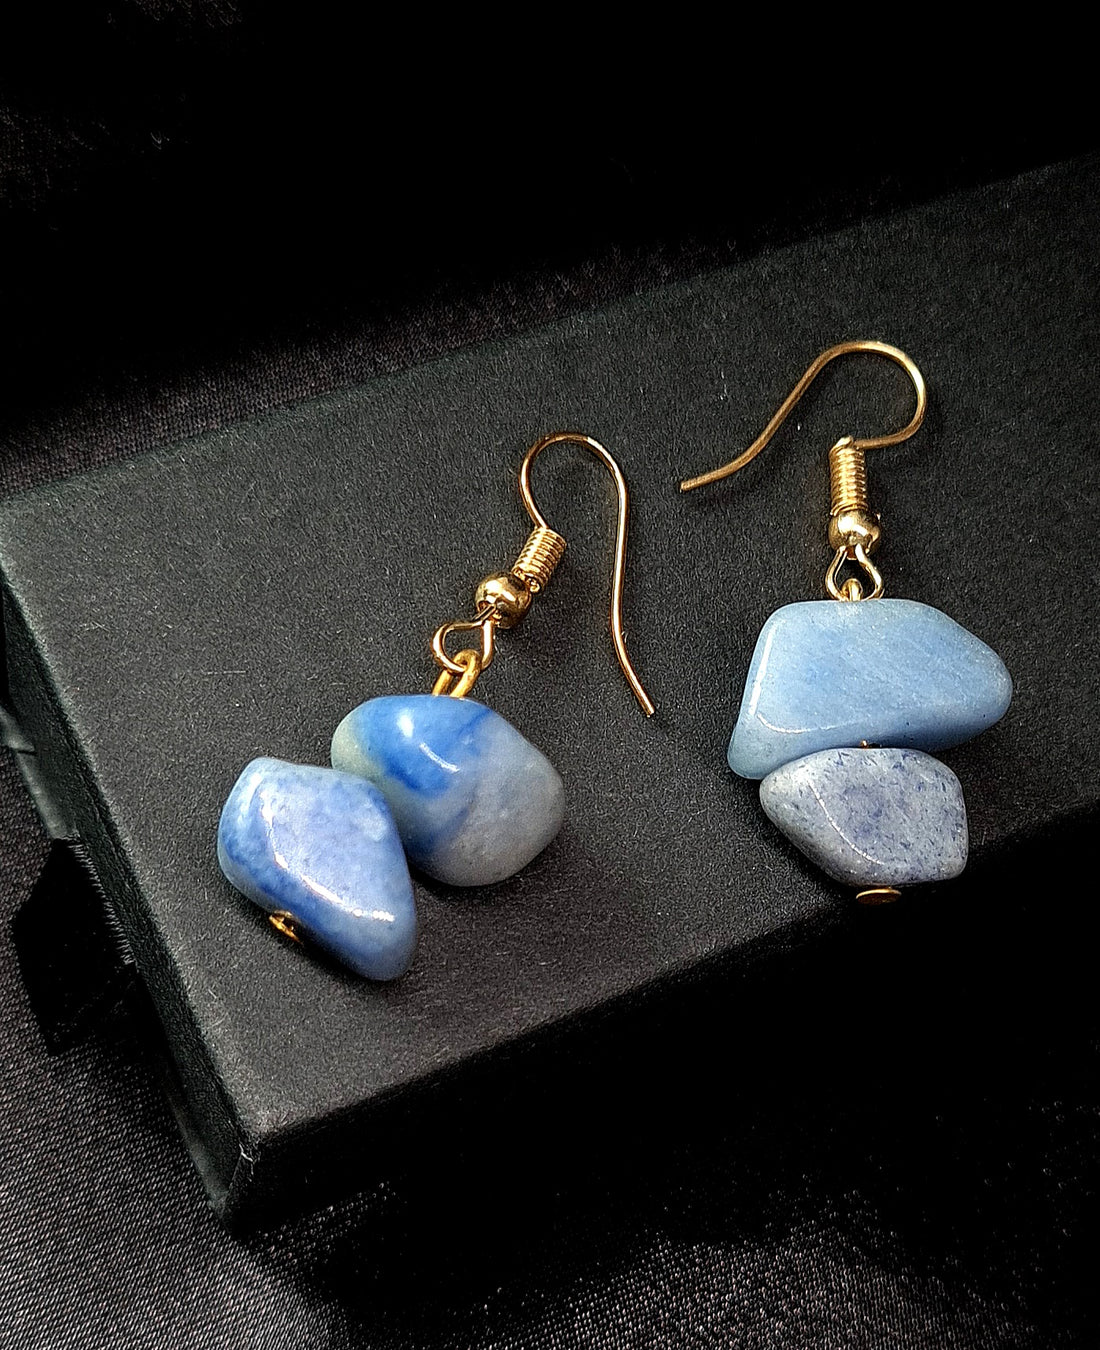 handmade blue earrings showcased on black jewelry box